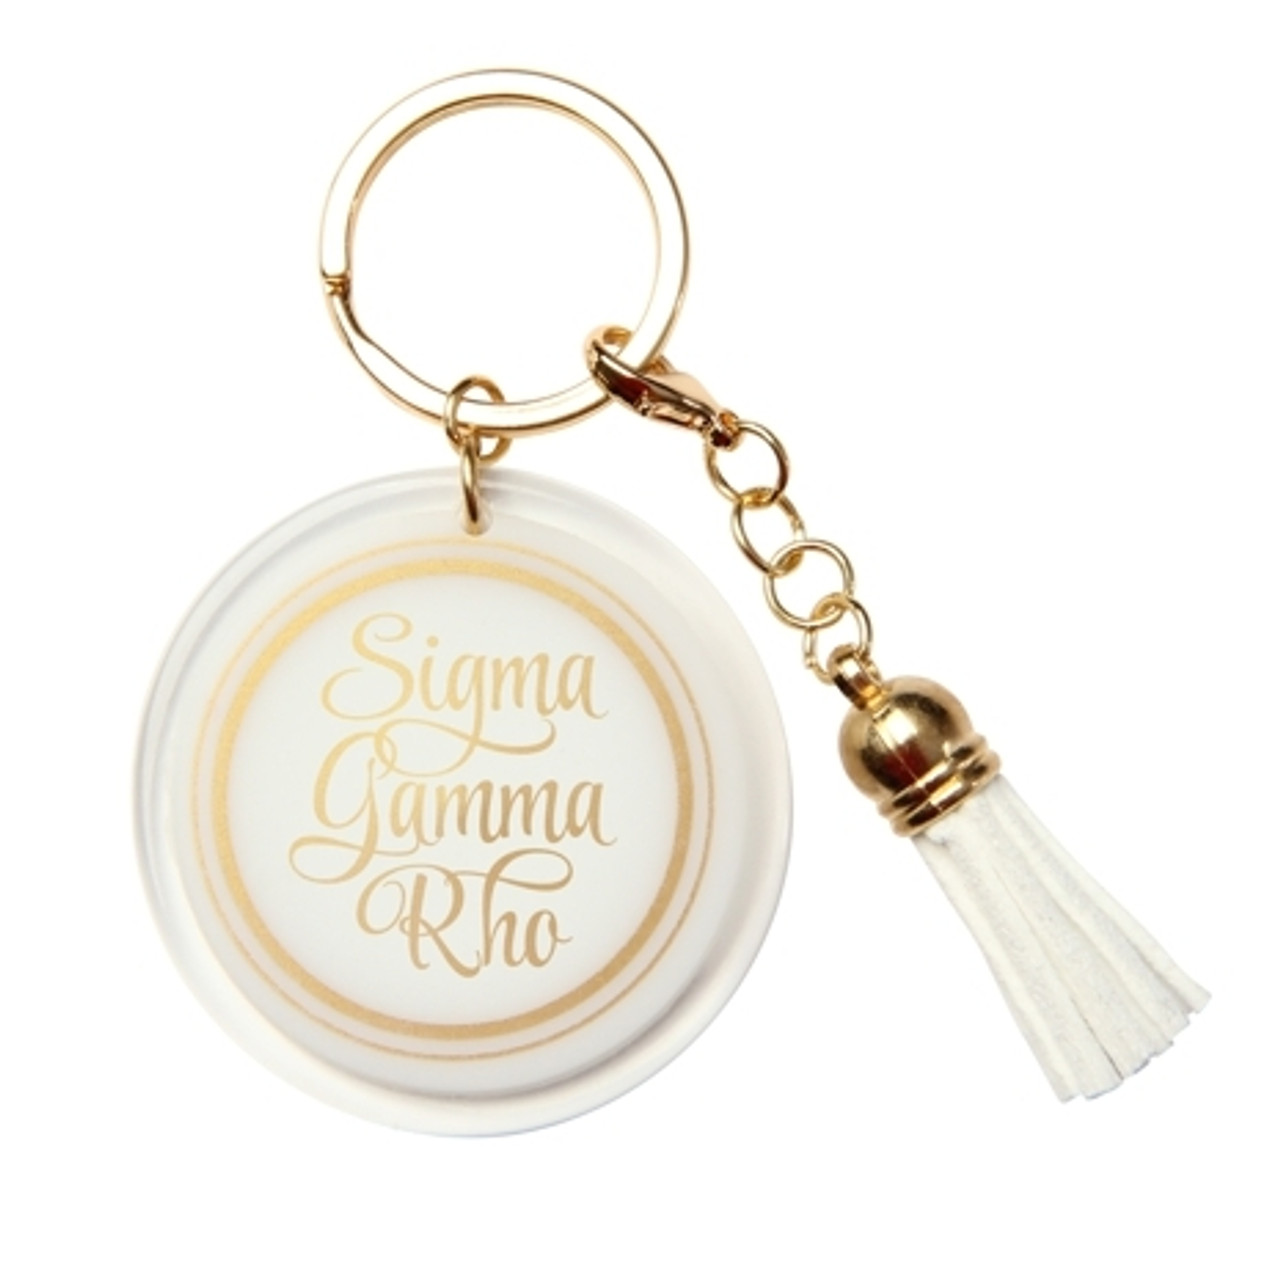 Top Selling Sigma Gamma Rho Items